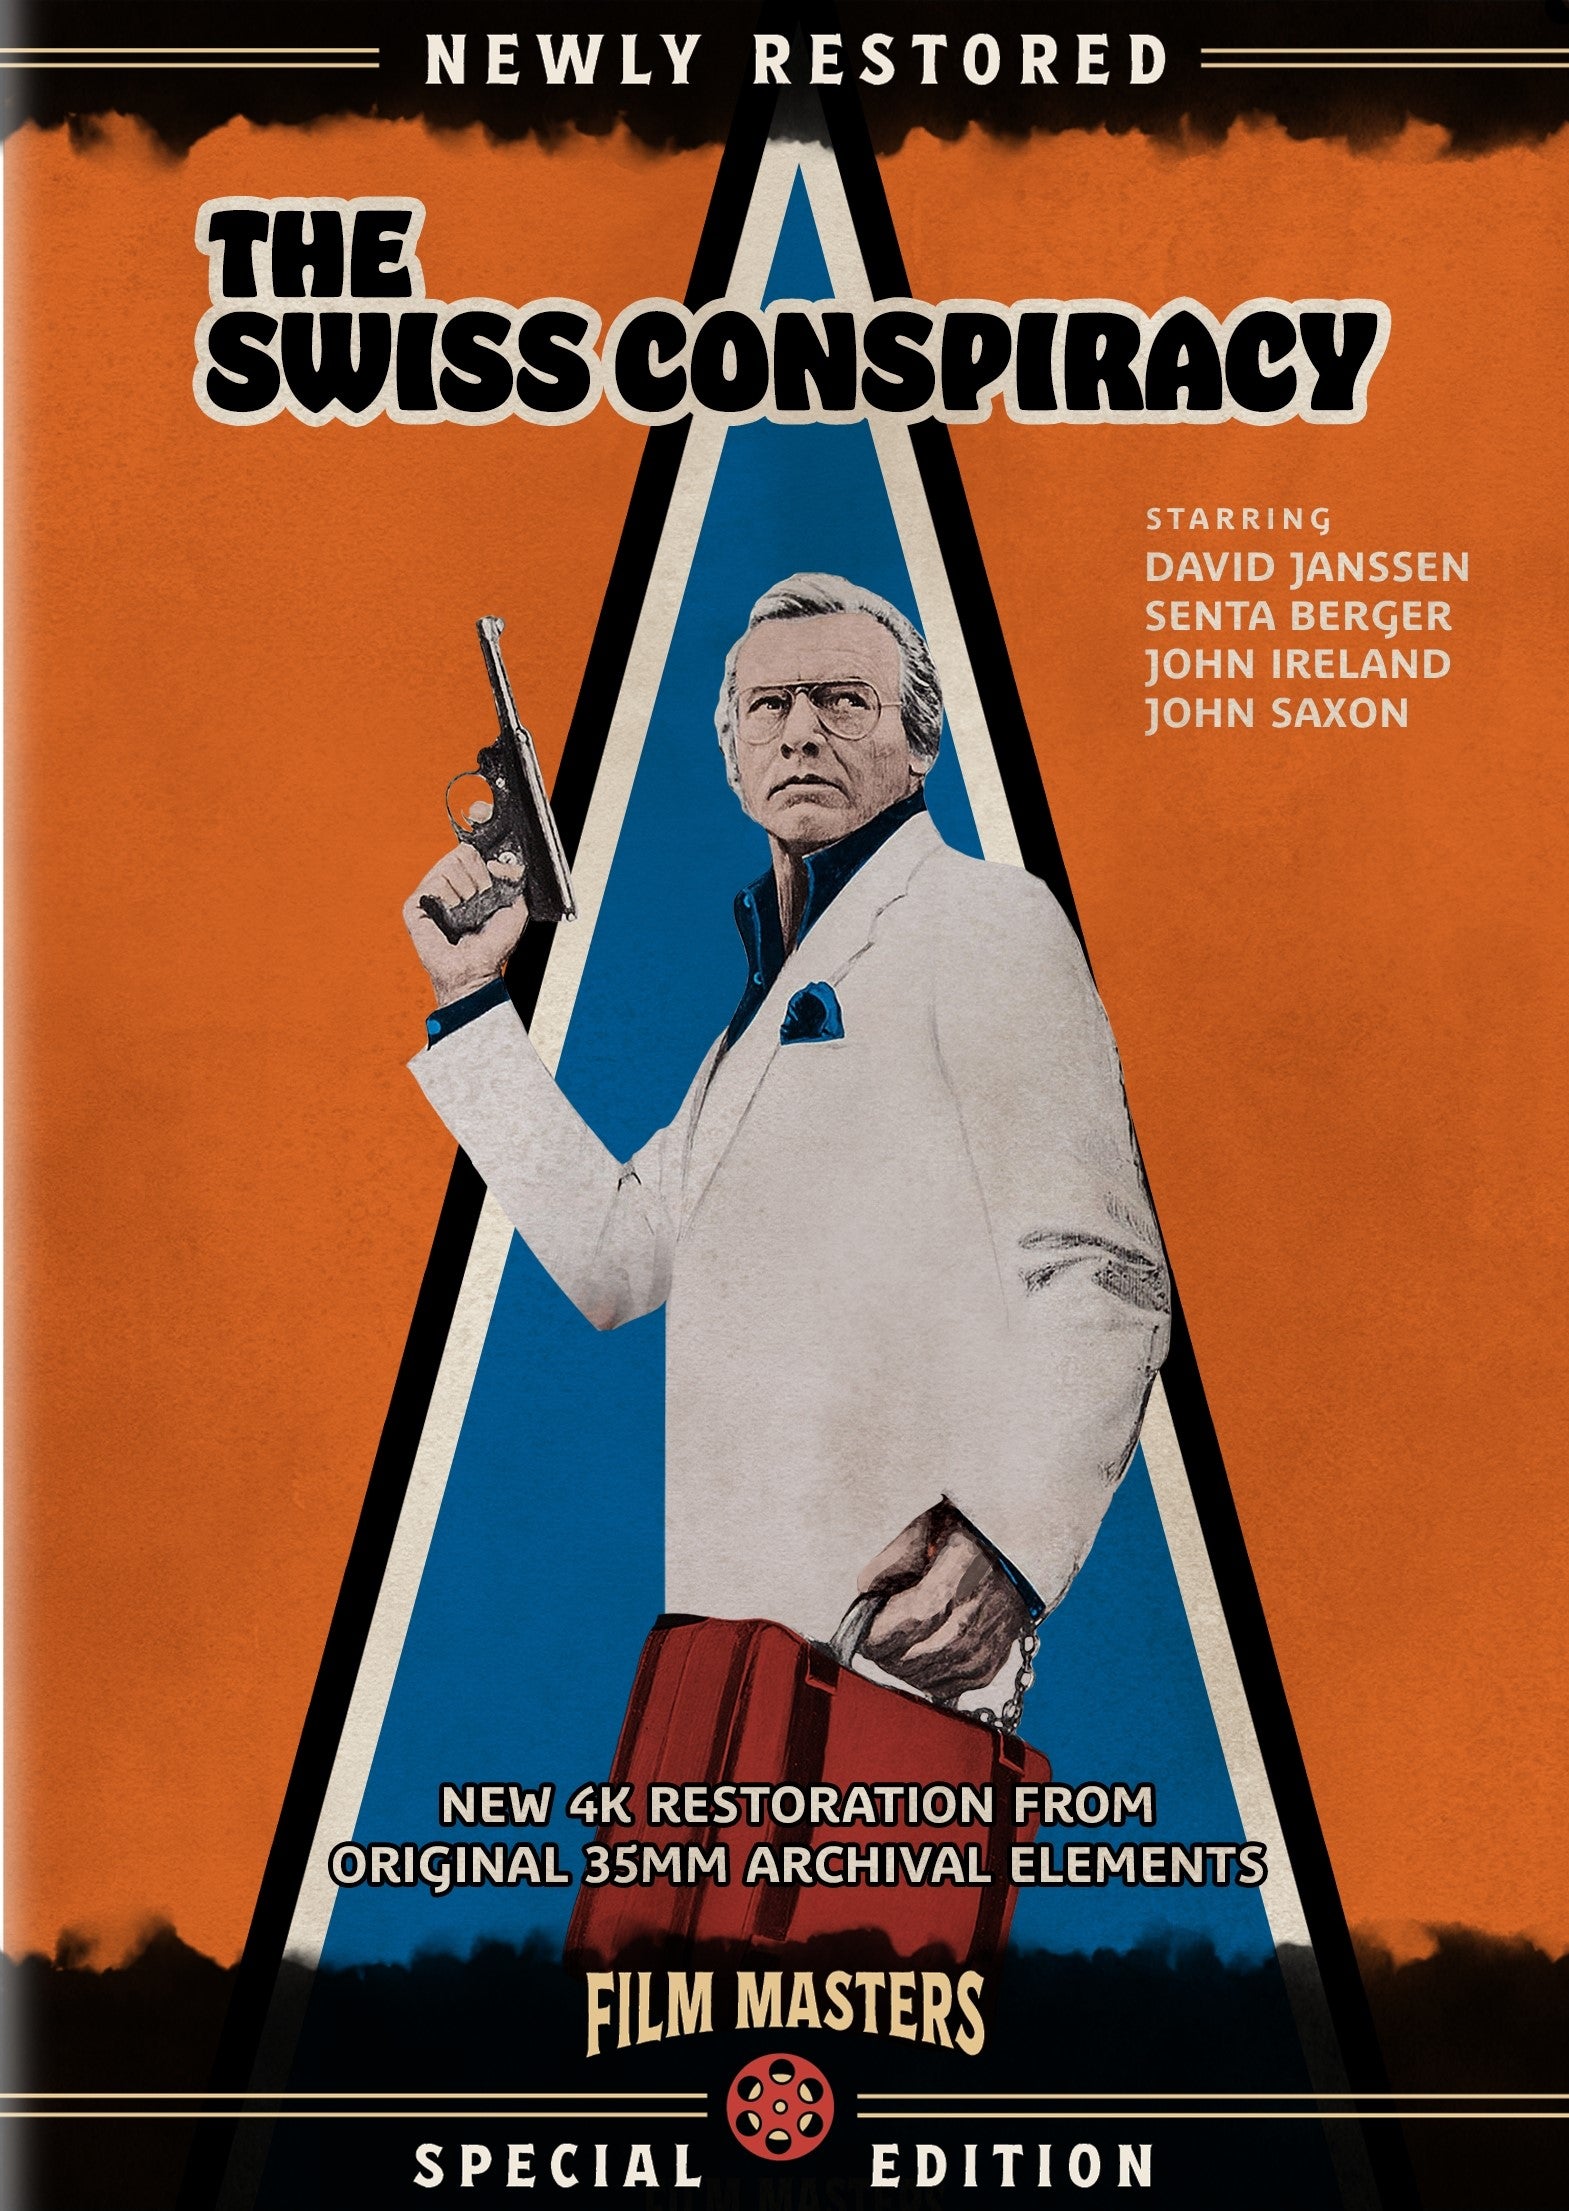 THE SWISS CONSPIRACY DVD